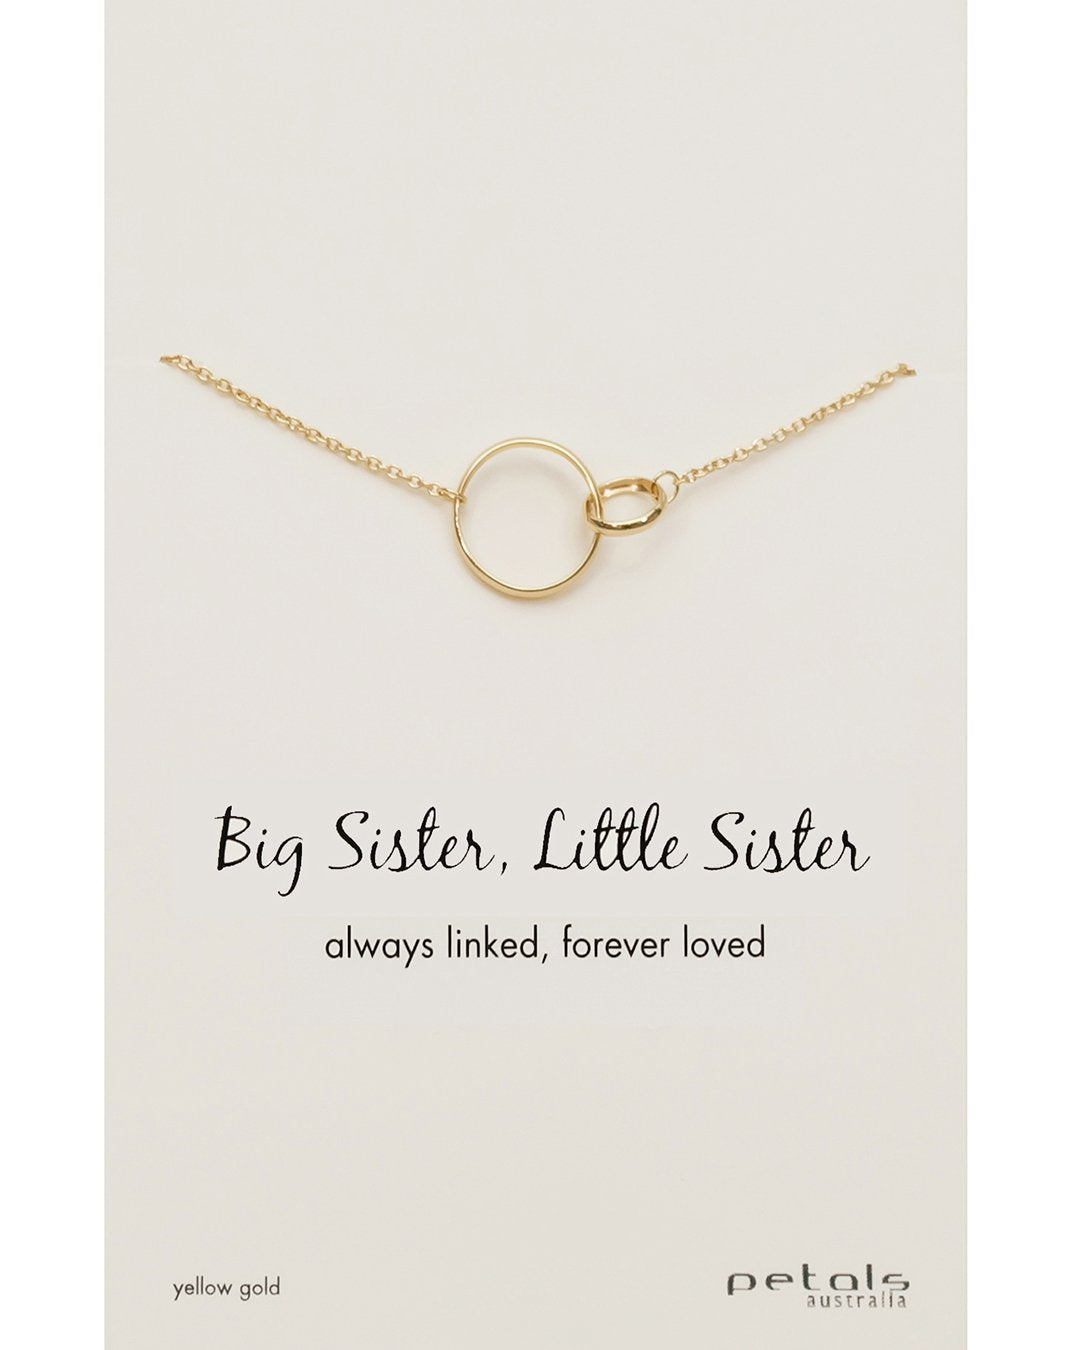 KUIYAI Sister Necklace for 2 Big Sister Little Sister Heart Pendant Necklace  (2 sis necklace set silver) | Amazon.com